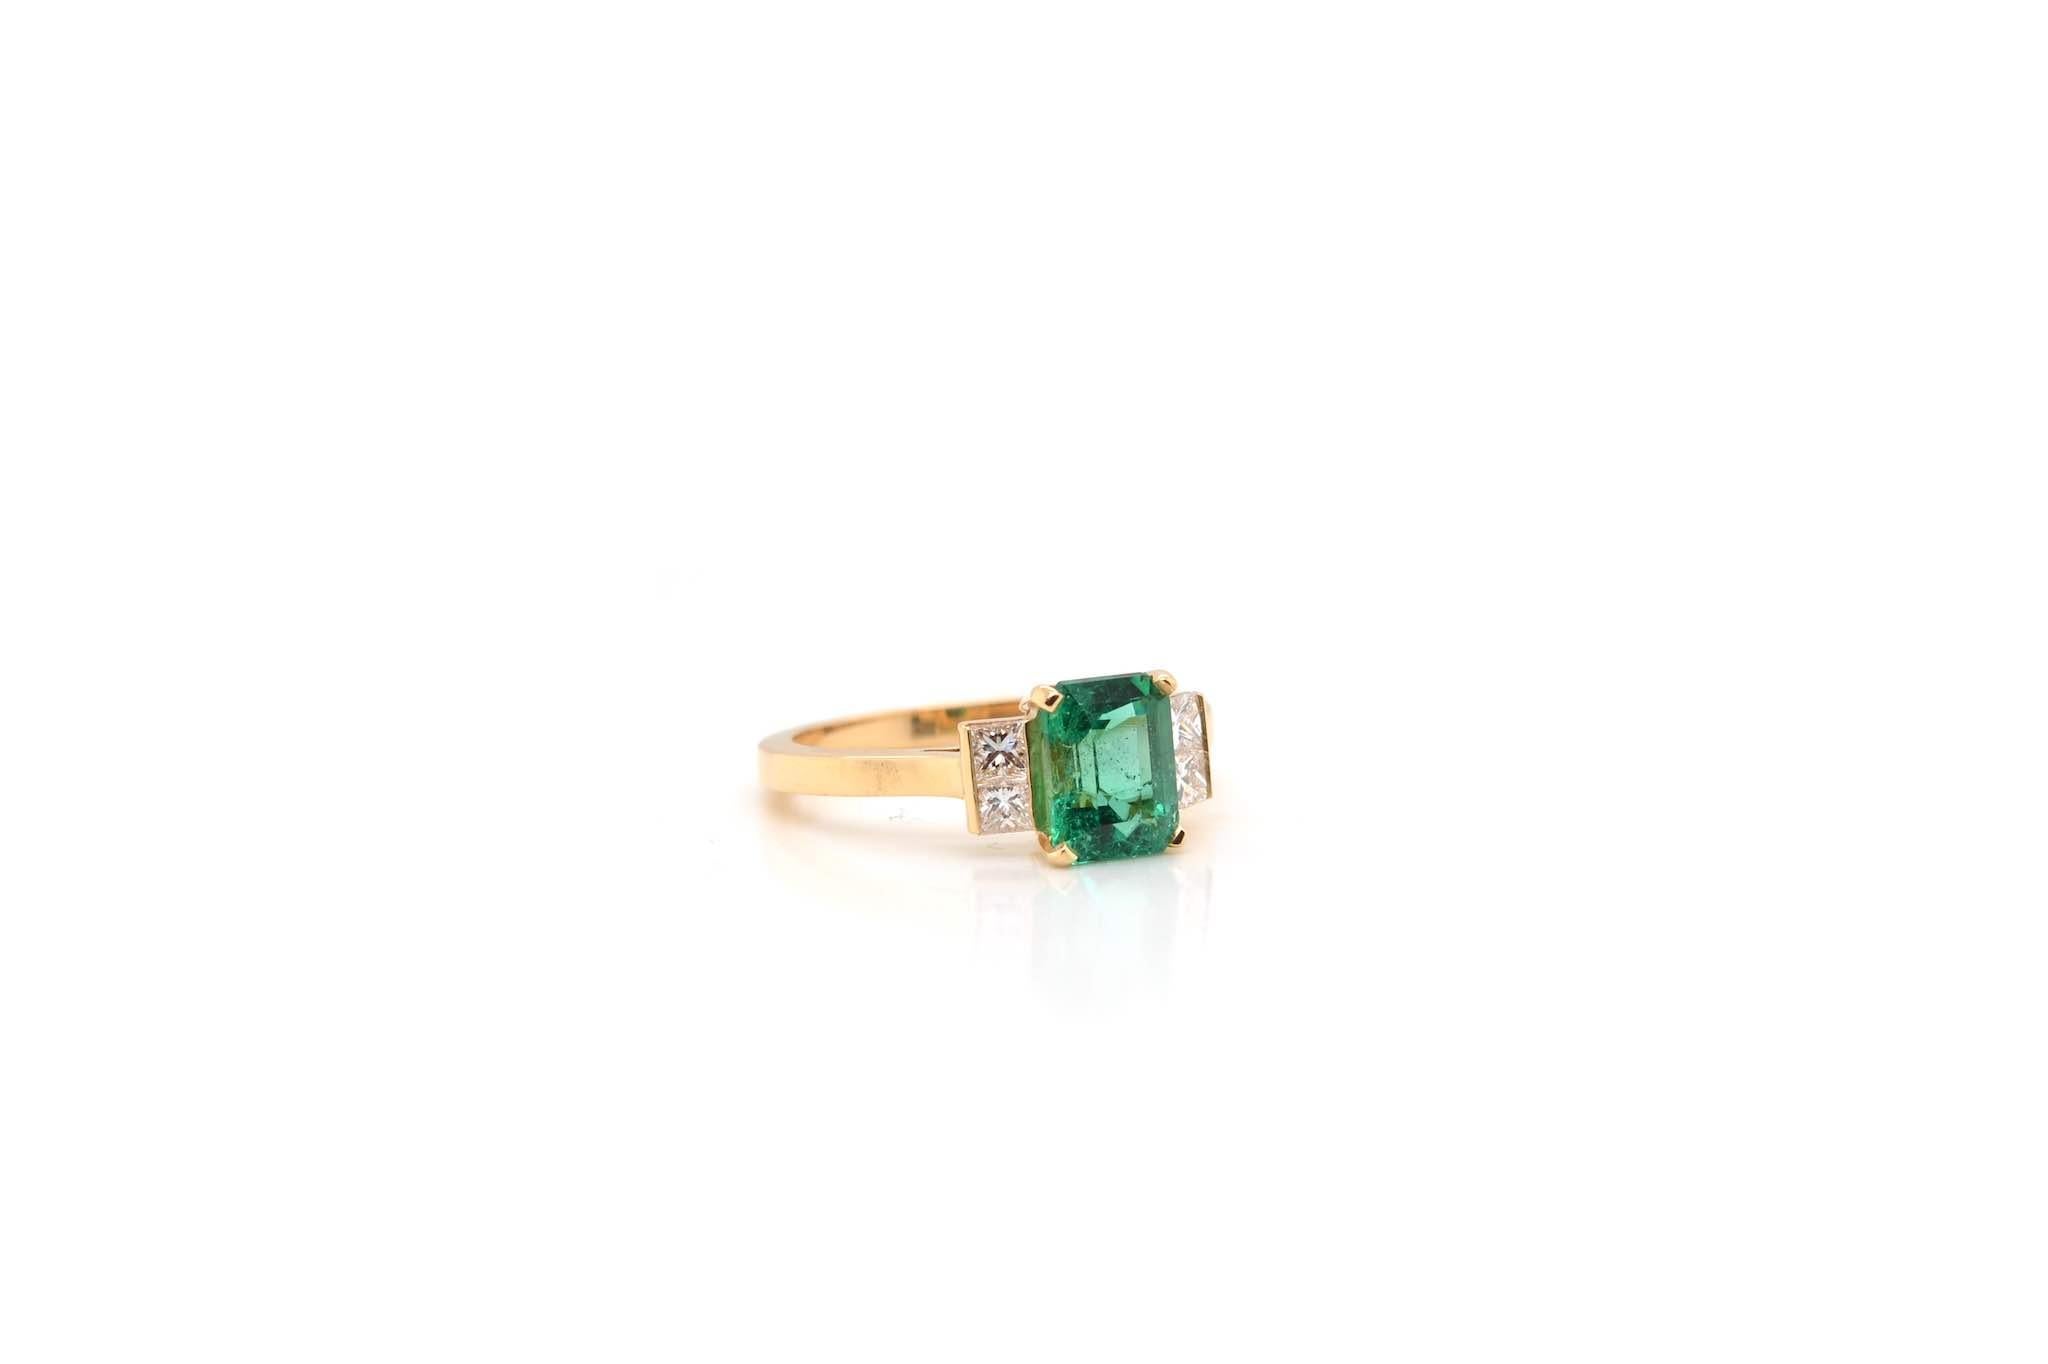 Emerald Cut 1.36 carat emerald and princess cuts diamonds ring For Sale